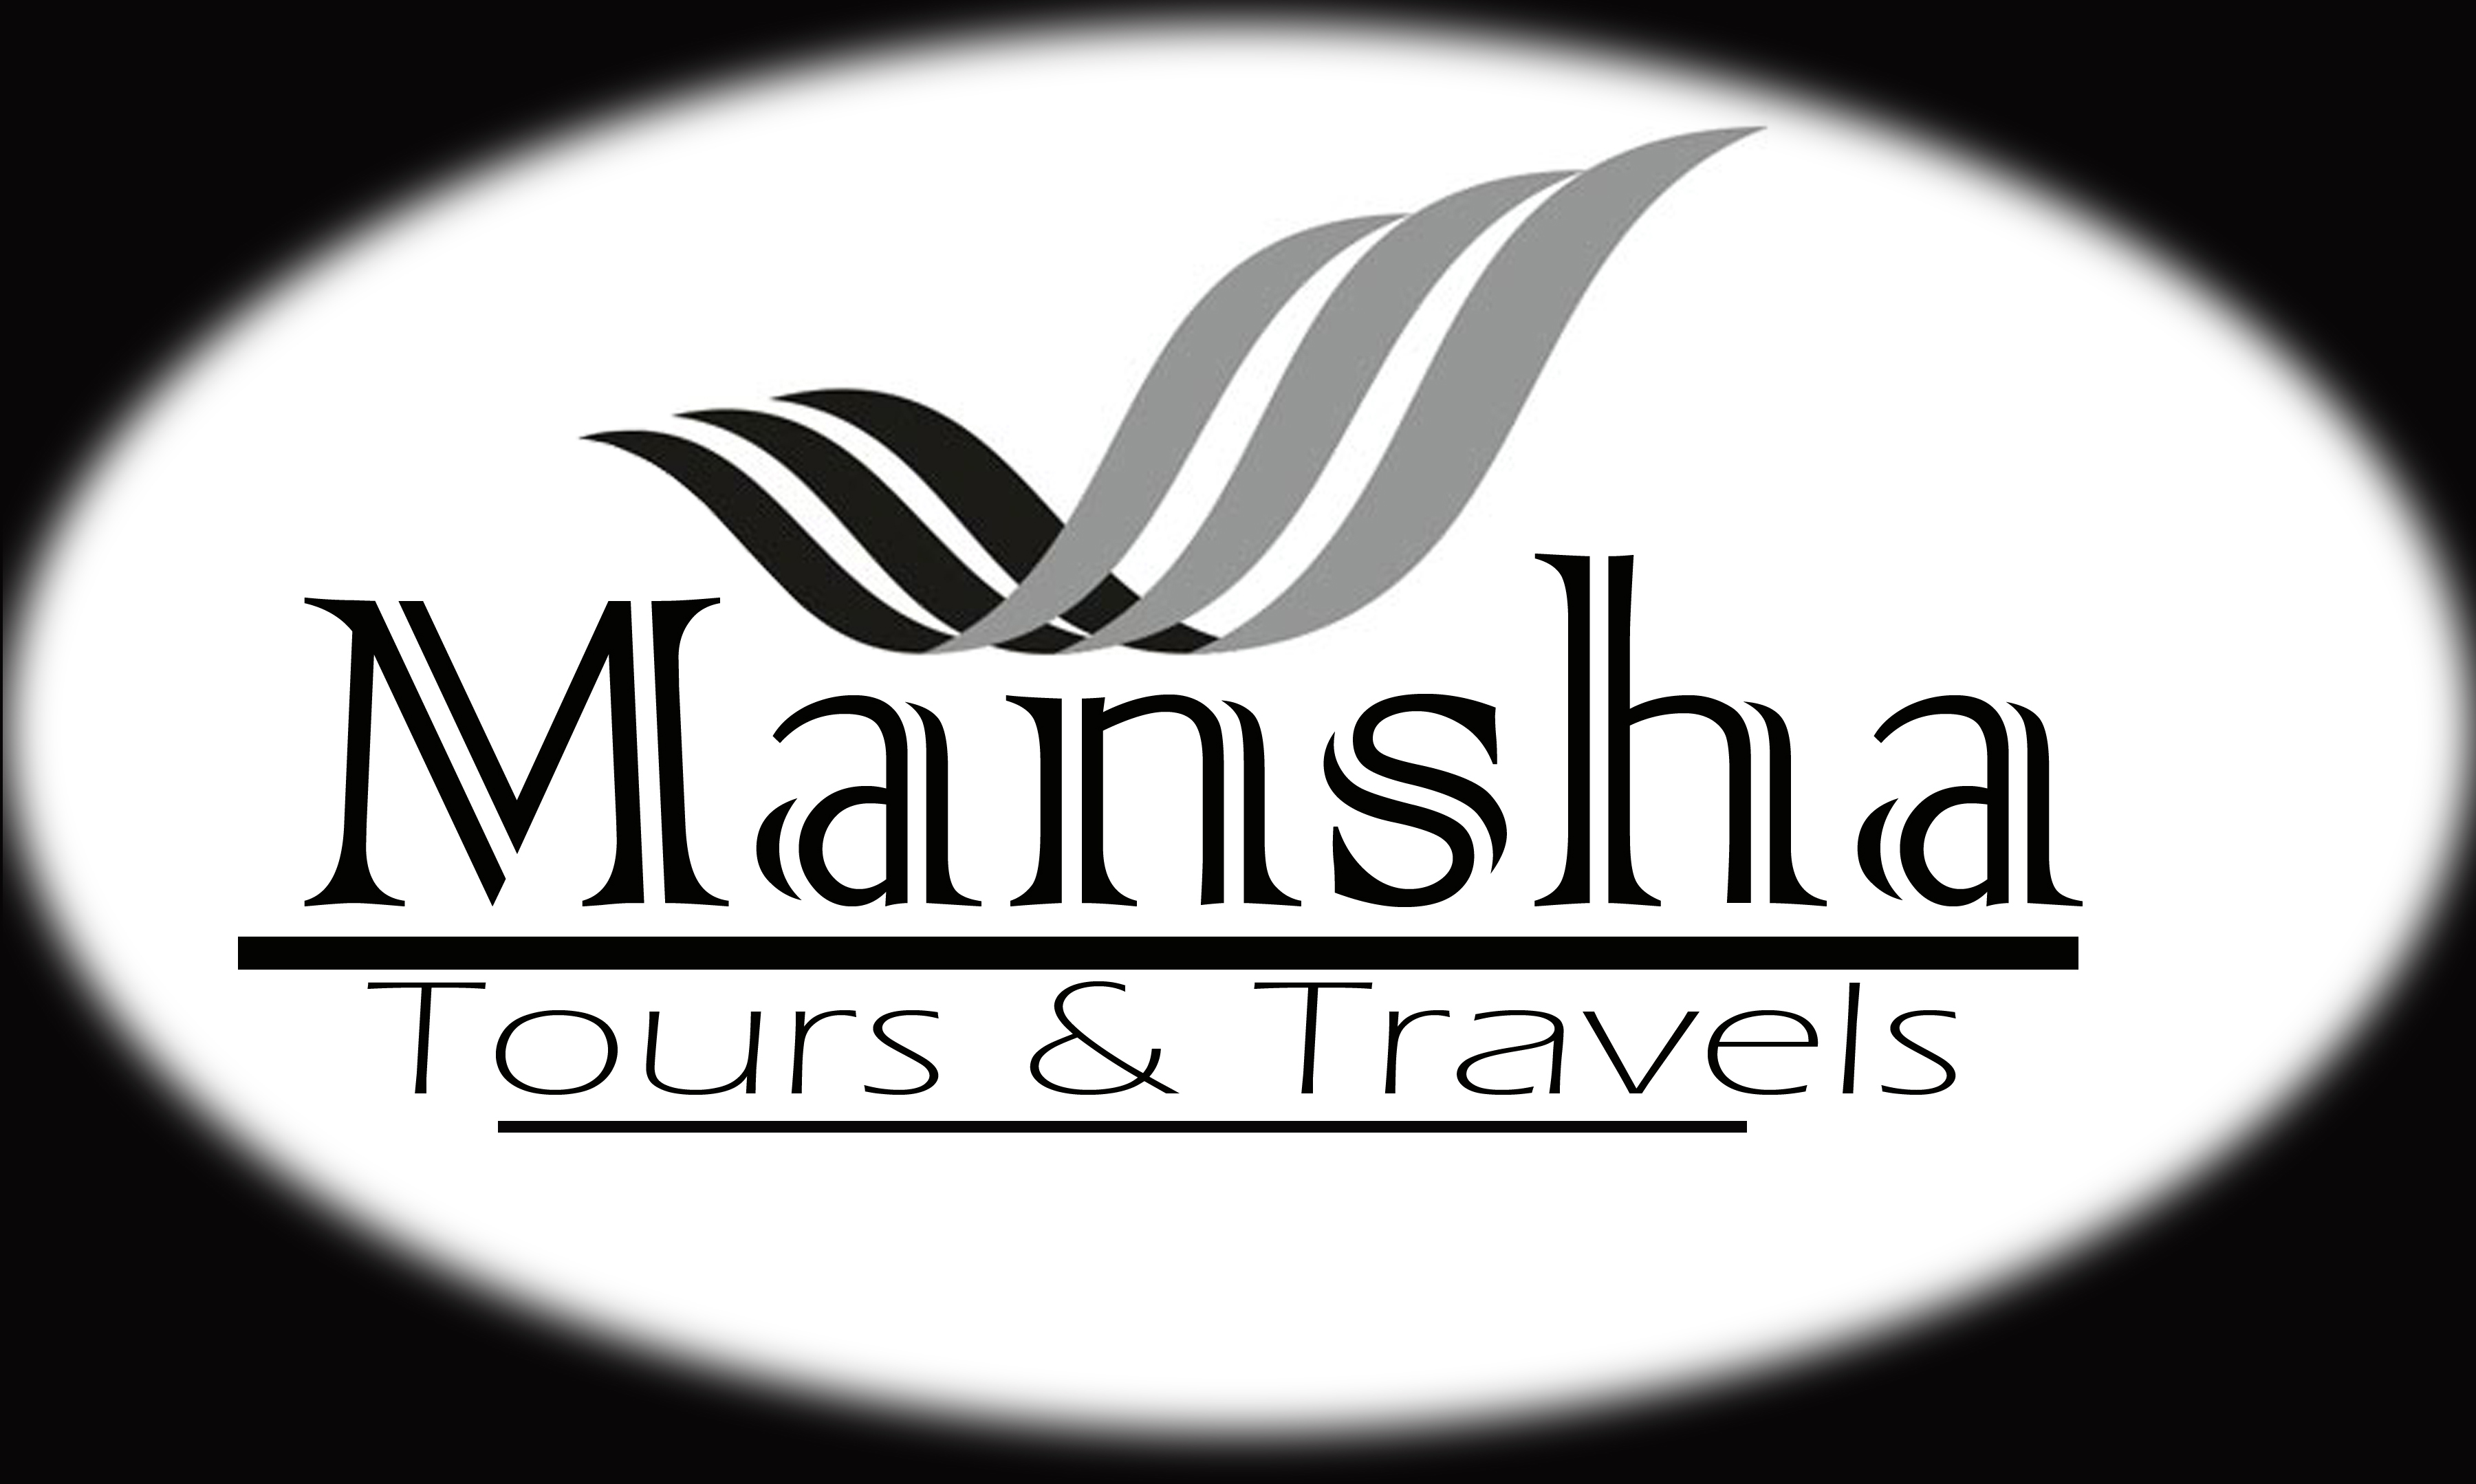 Mansha Tours and Travels